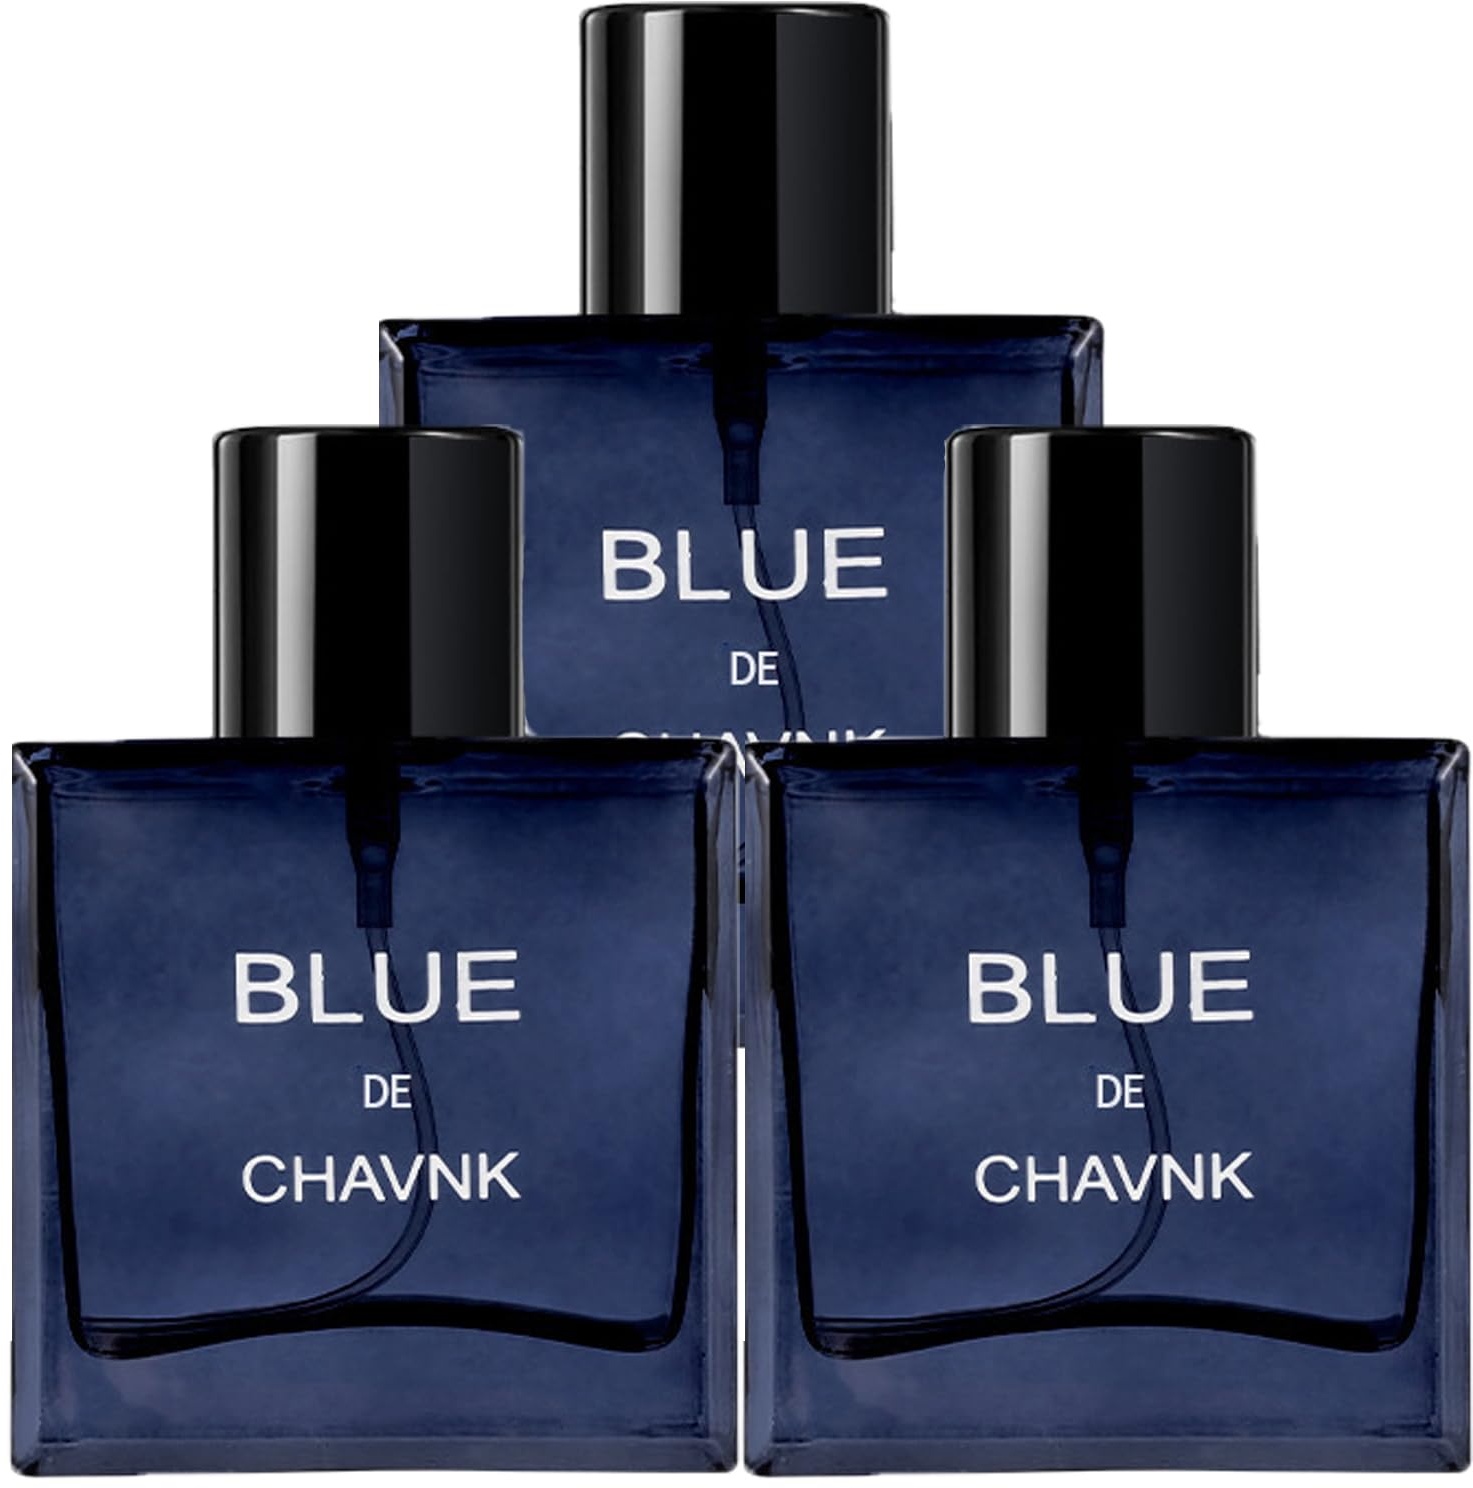 Flysmus Blue De Lurex Pheromone Cologne for Men, Pheromone Cologne For Men Attract Women, Men Feromone Perfume, Pheromones For Men To Attract Women Body Spray (150ml)